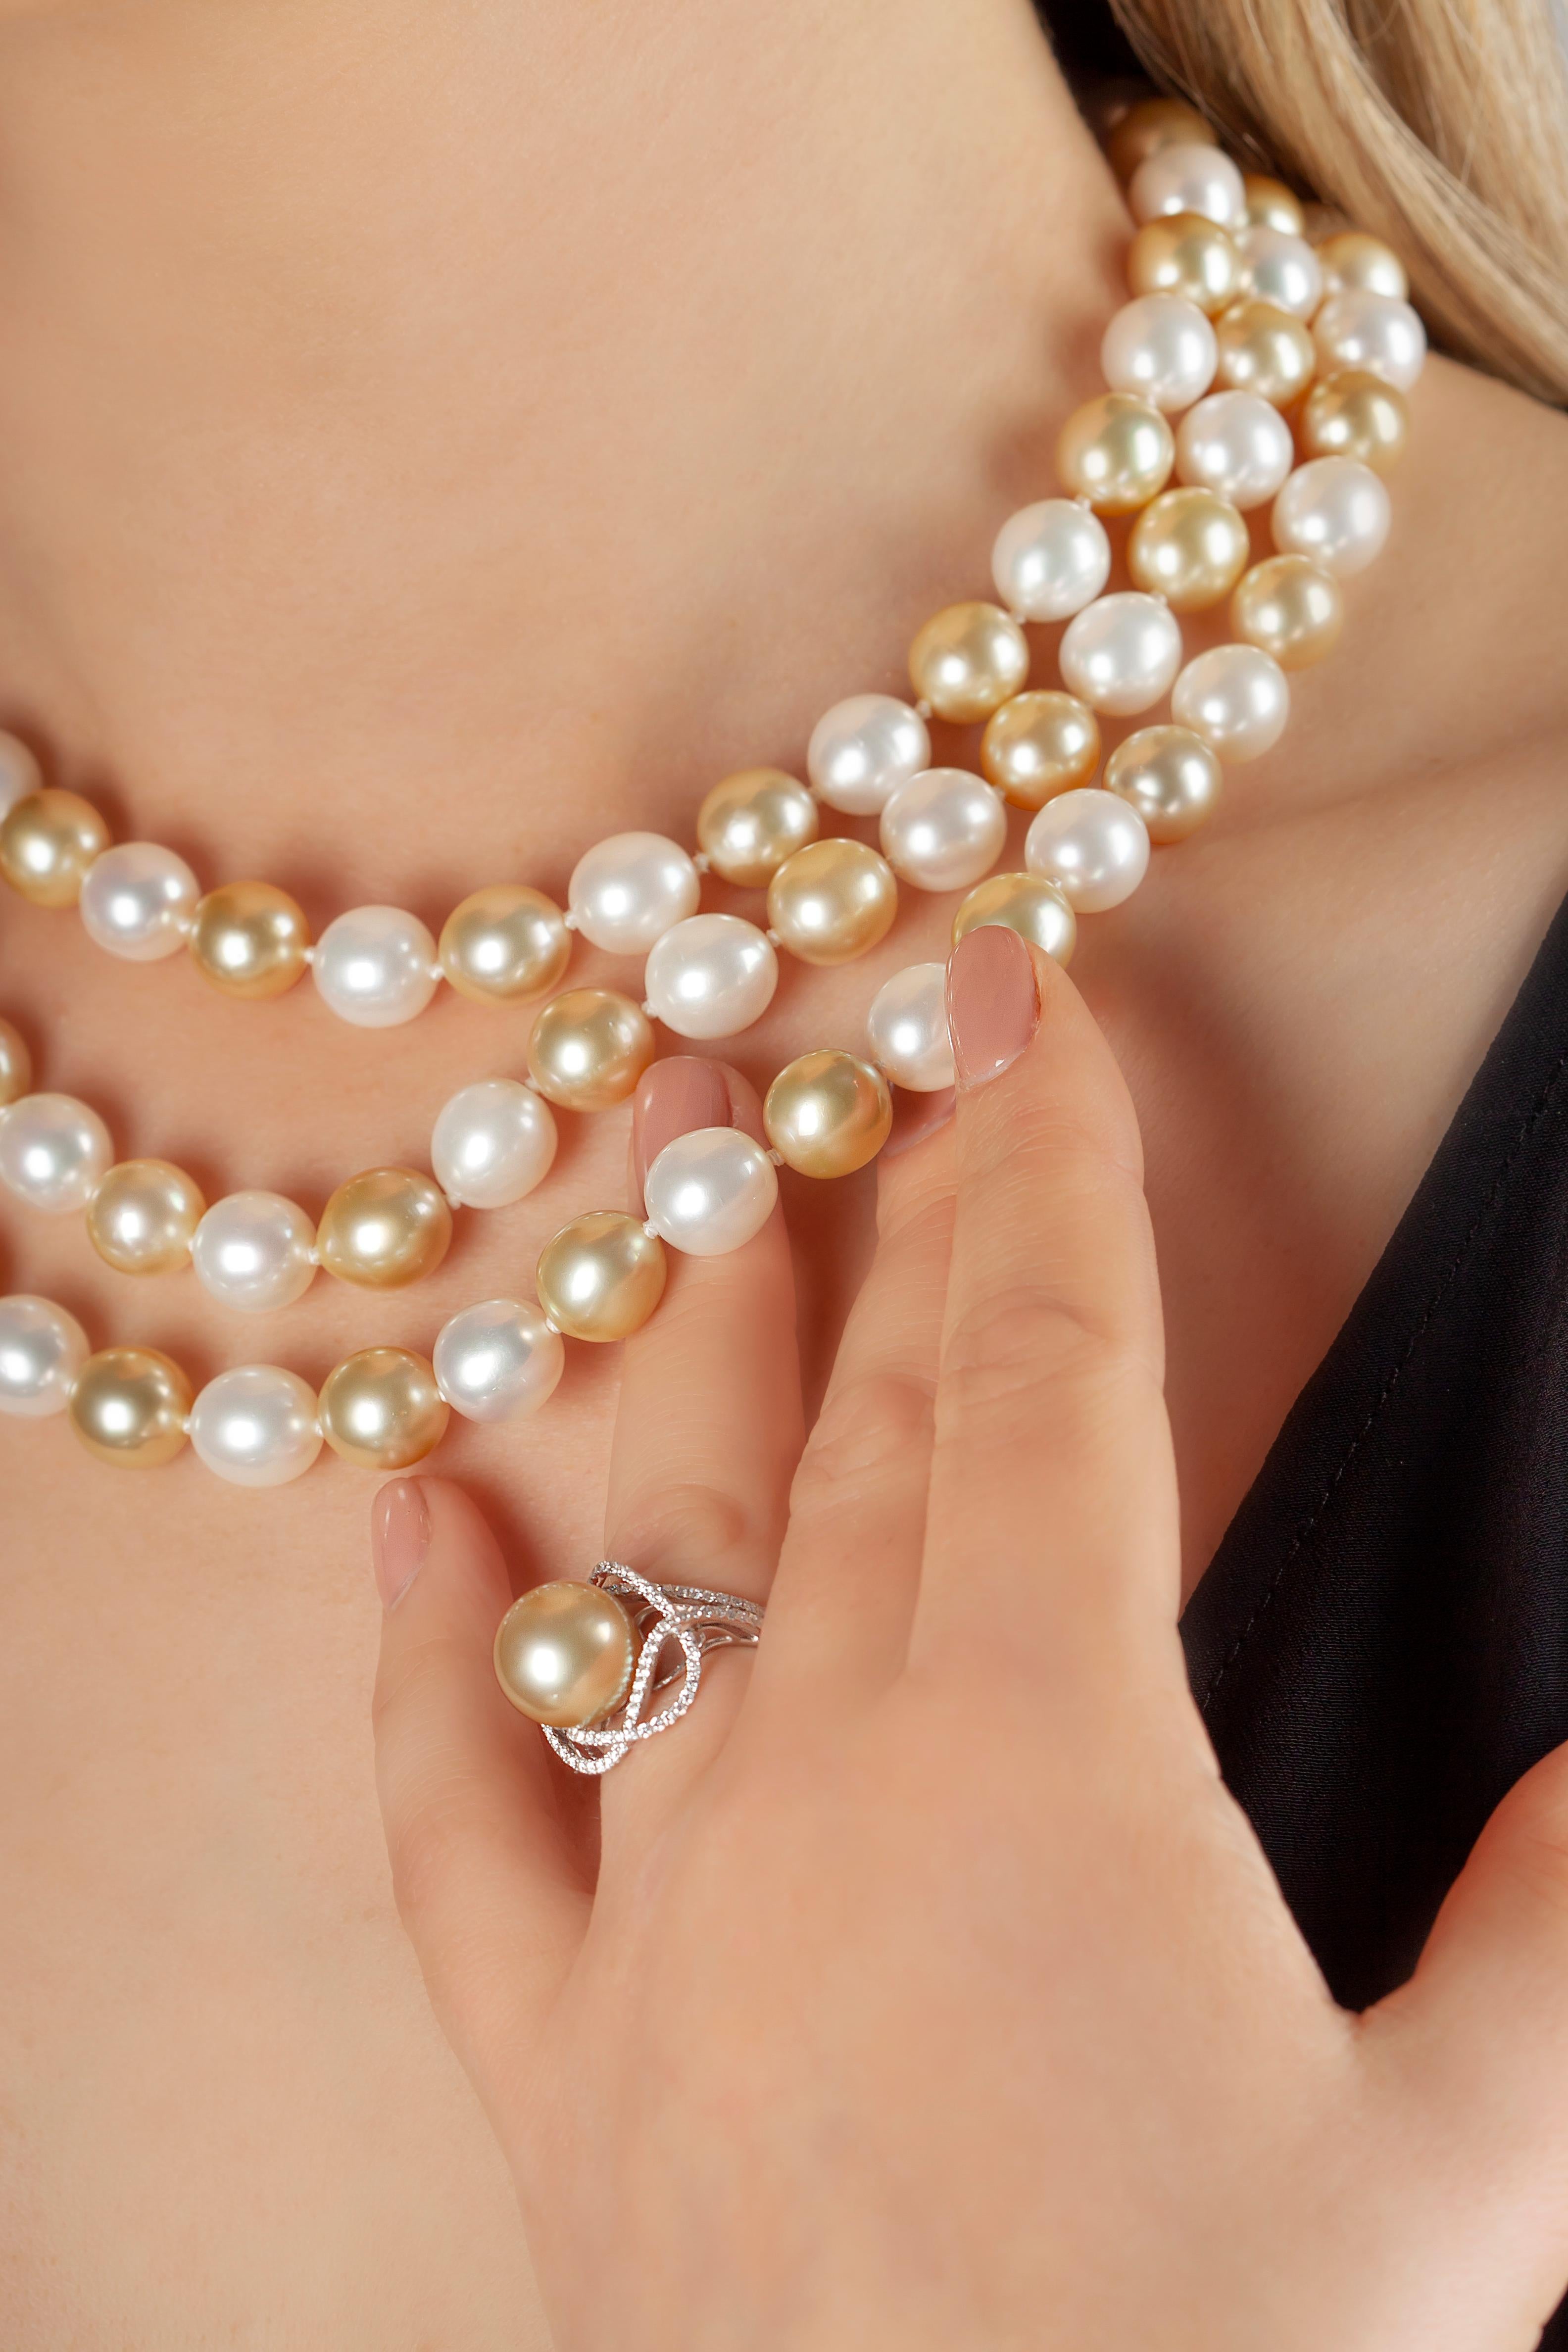 Contemporary Yoko London Golden South Sea Pearl and Diamond Ring in 18 Karat White Gold